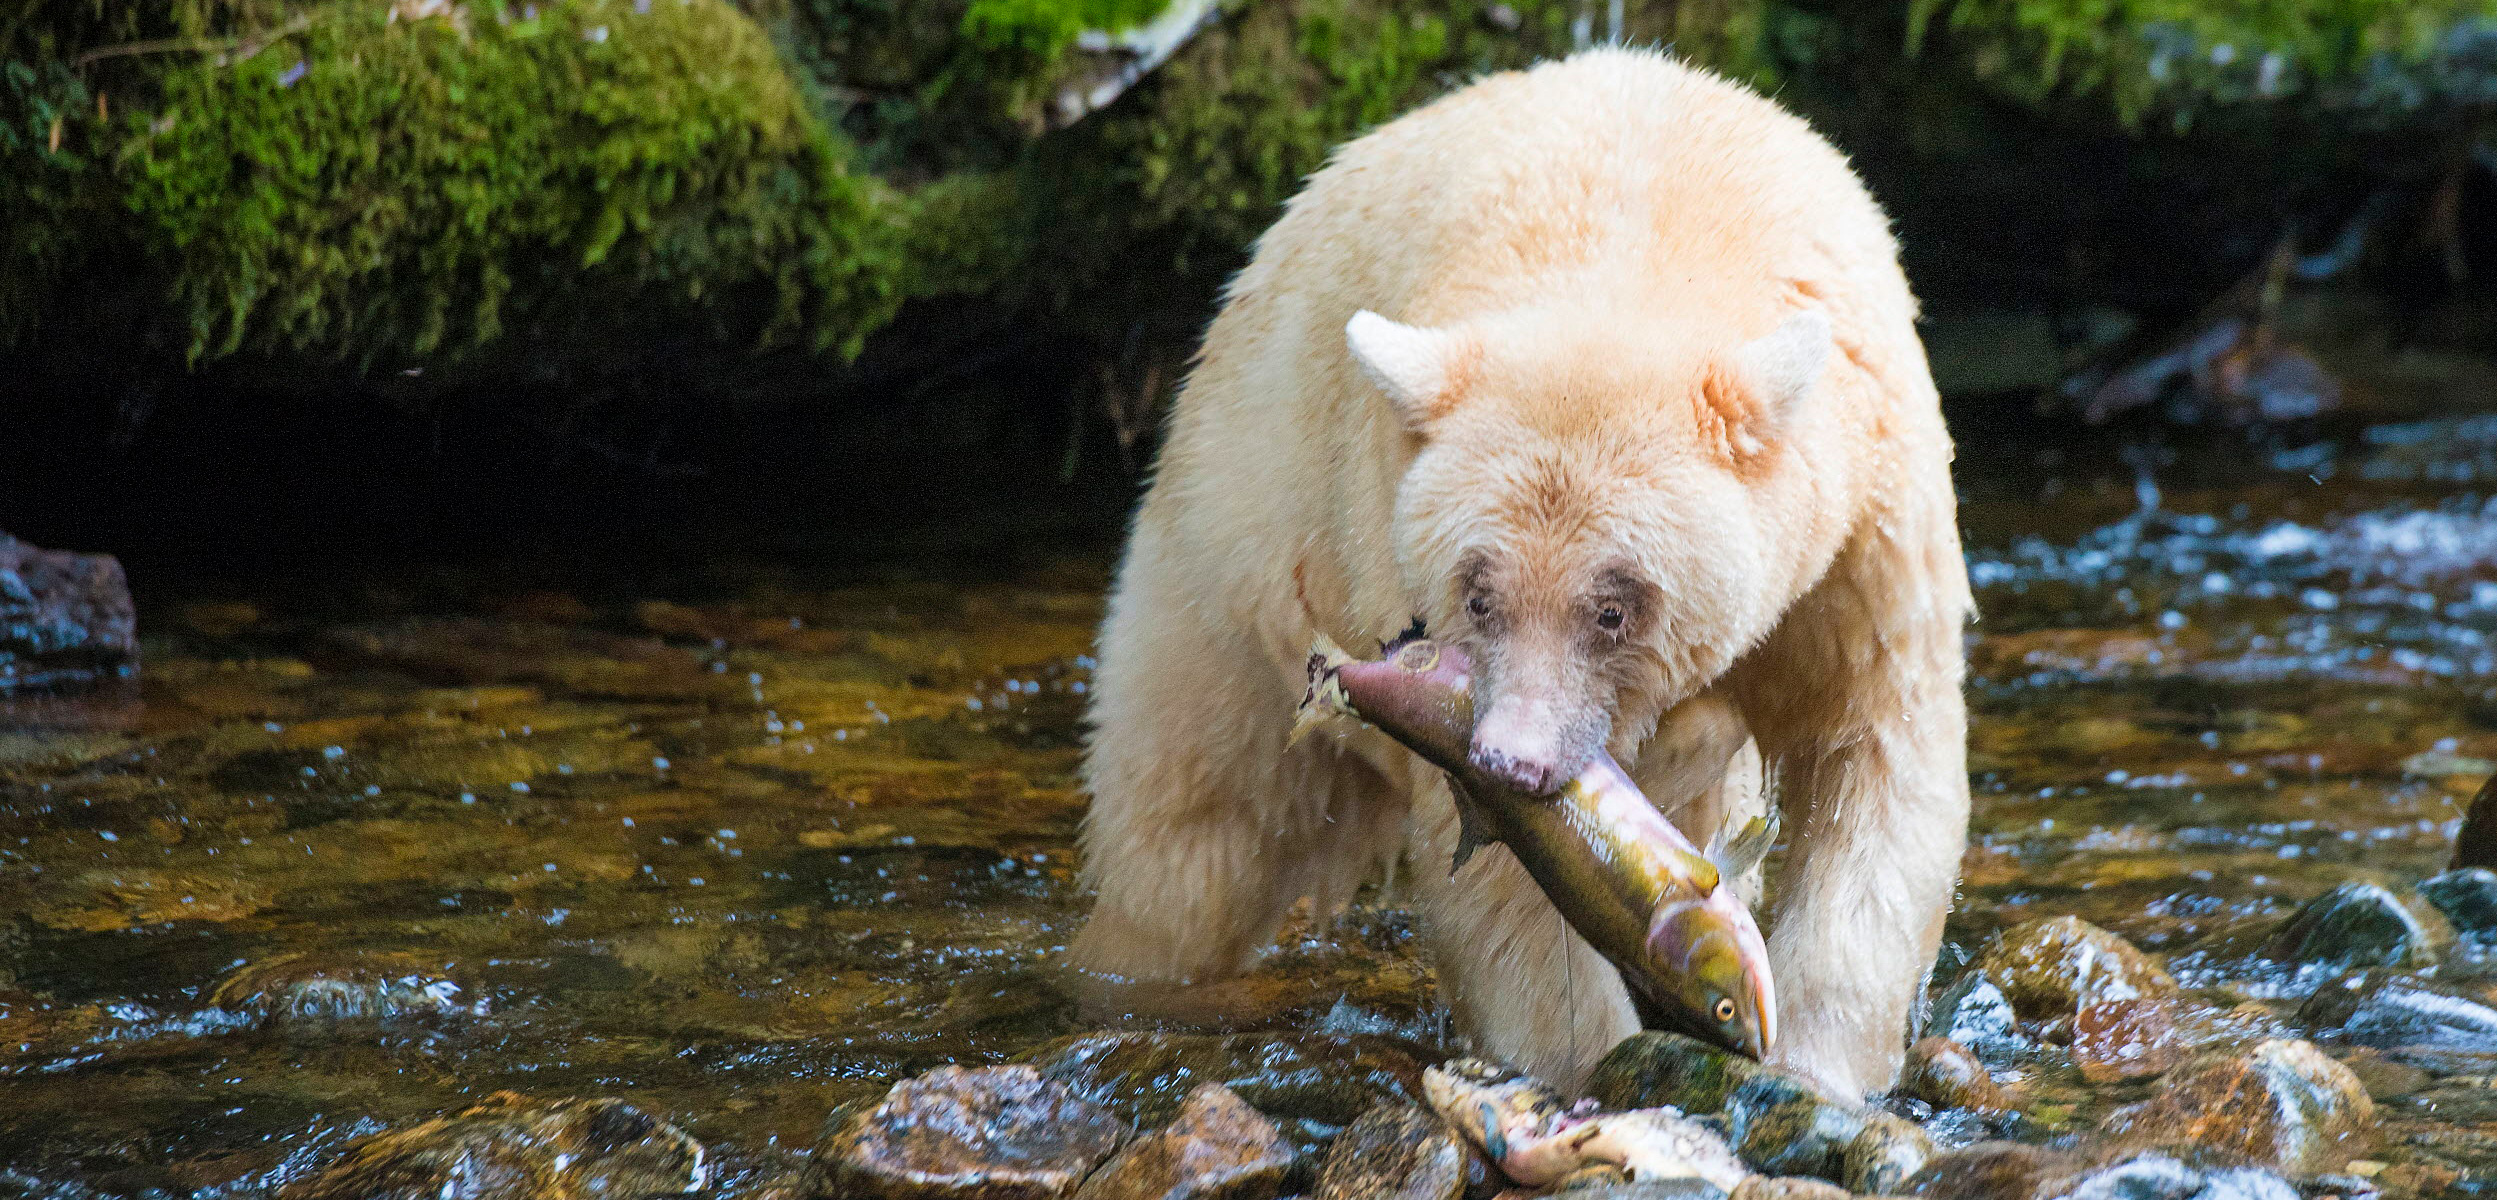 sprit bear with salmon